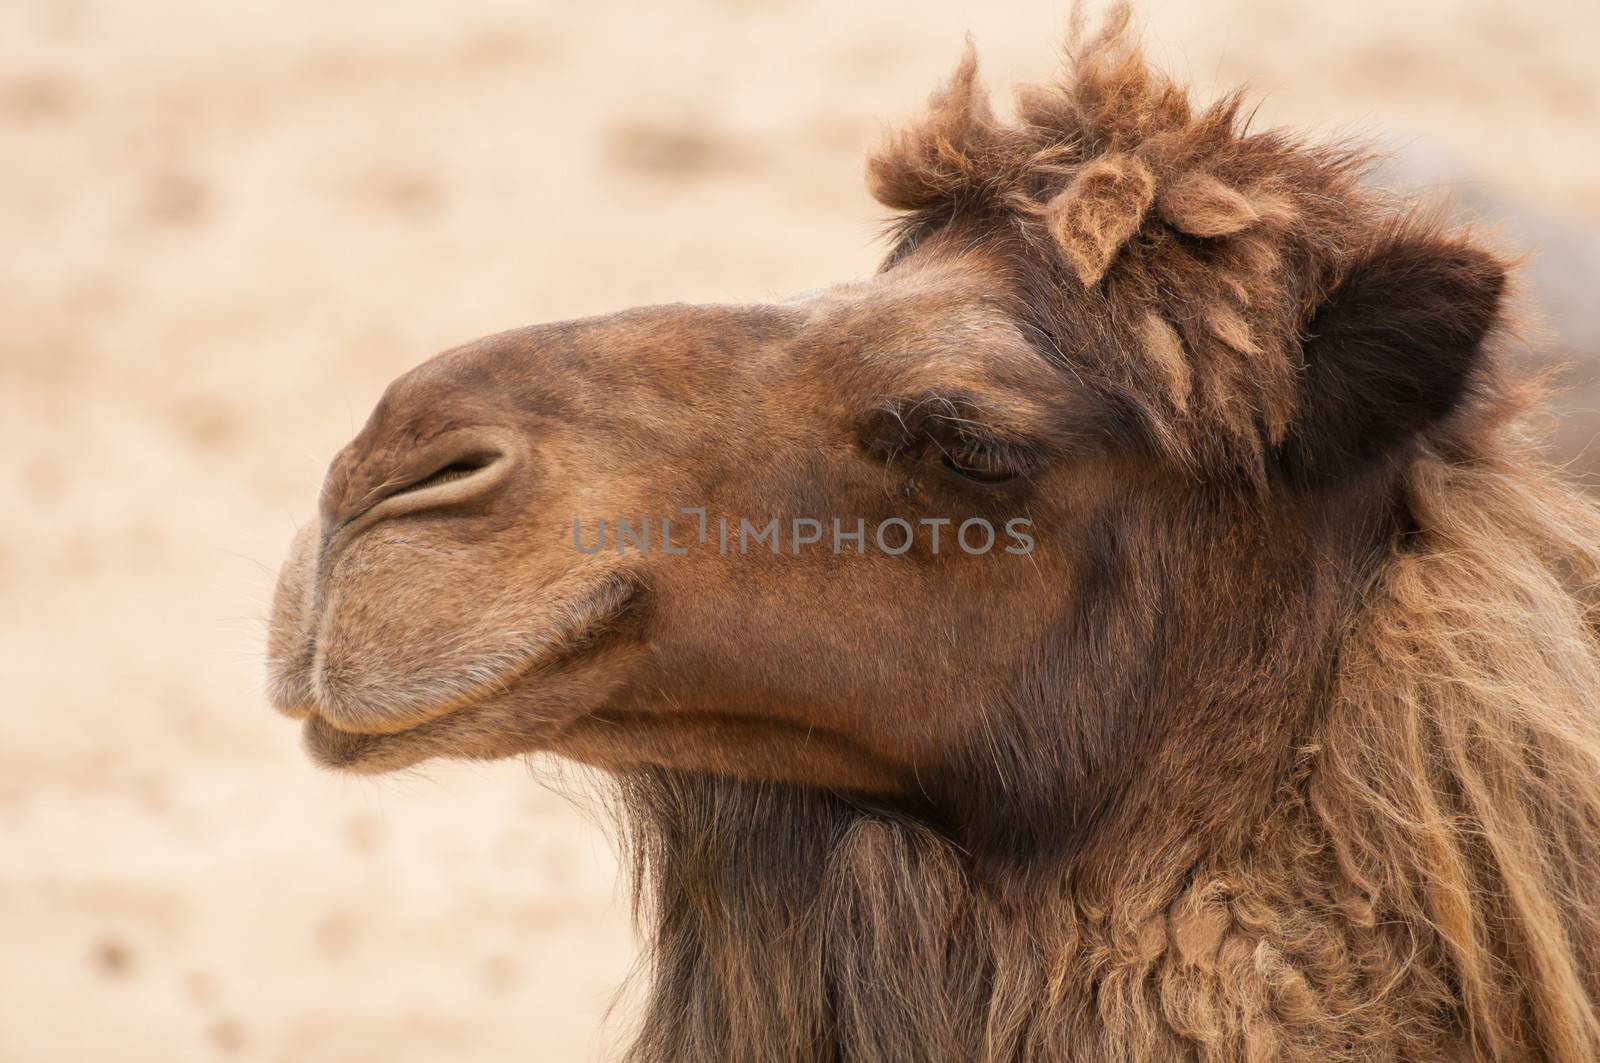 Camelus by Gucio_55